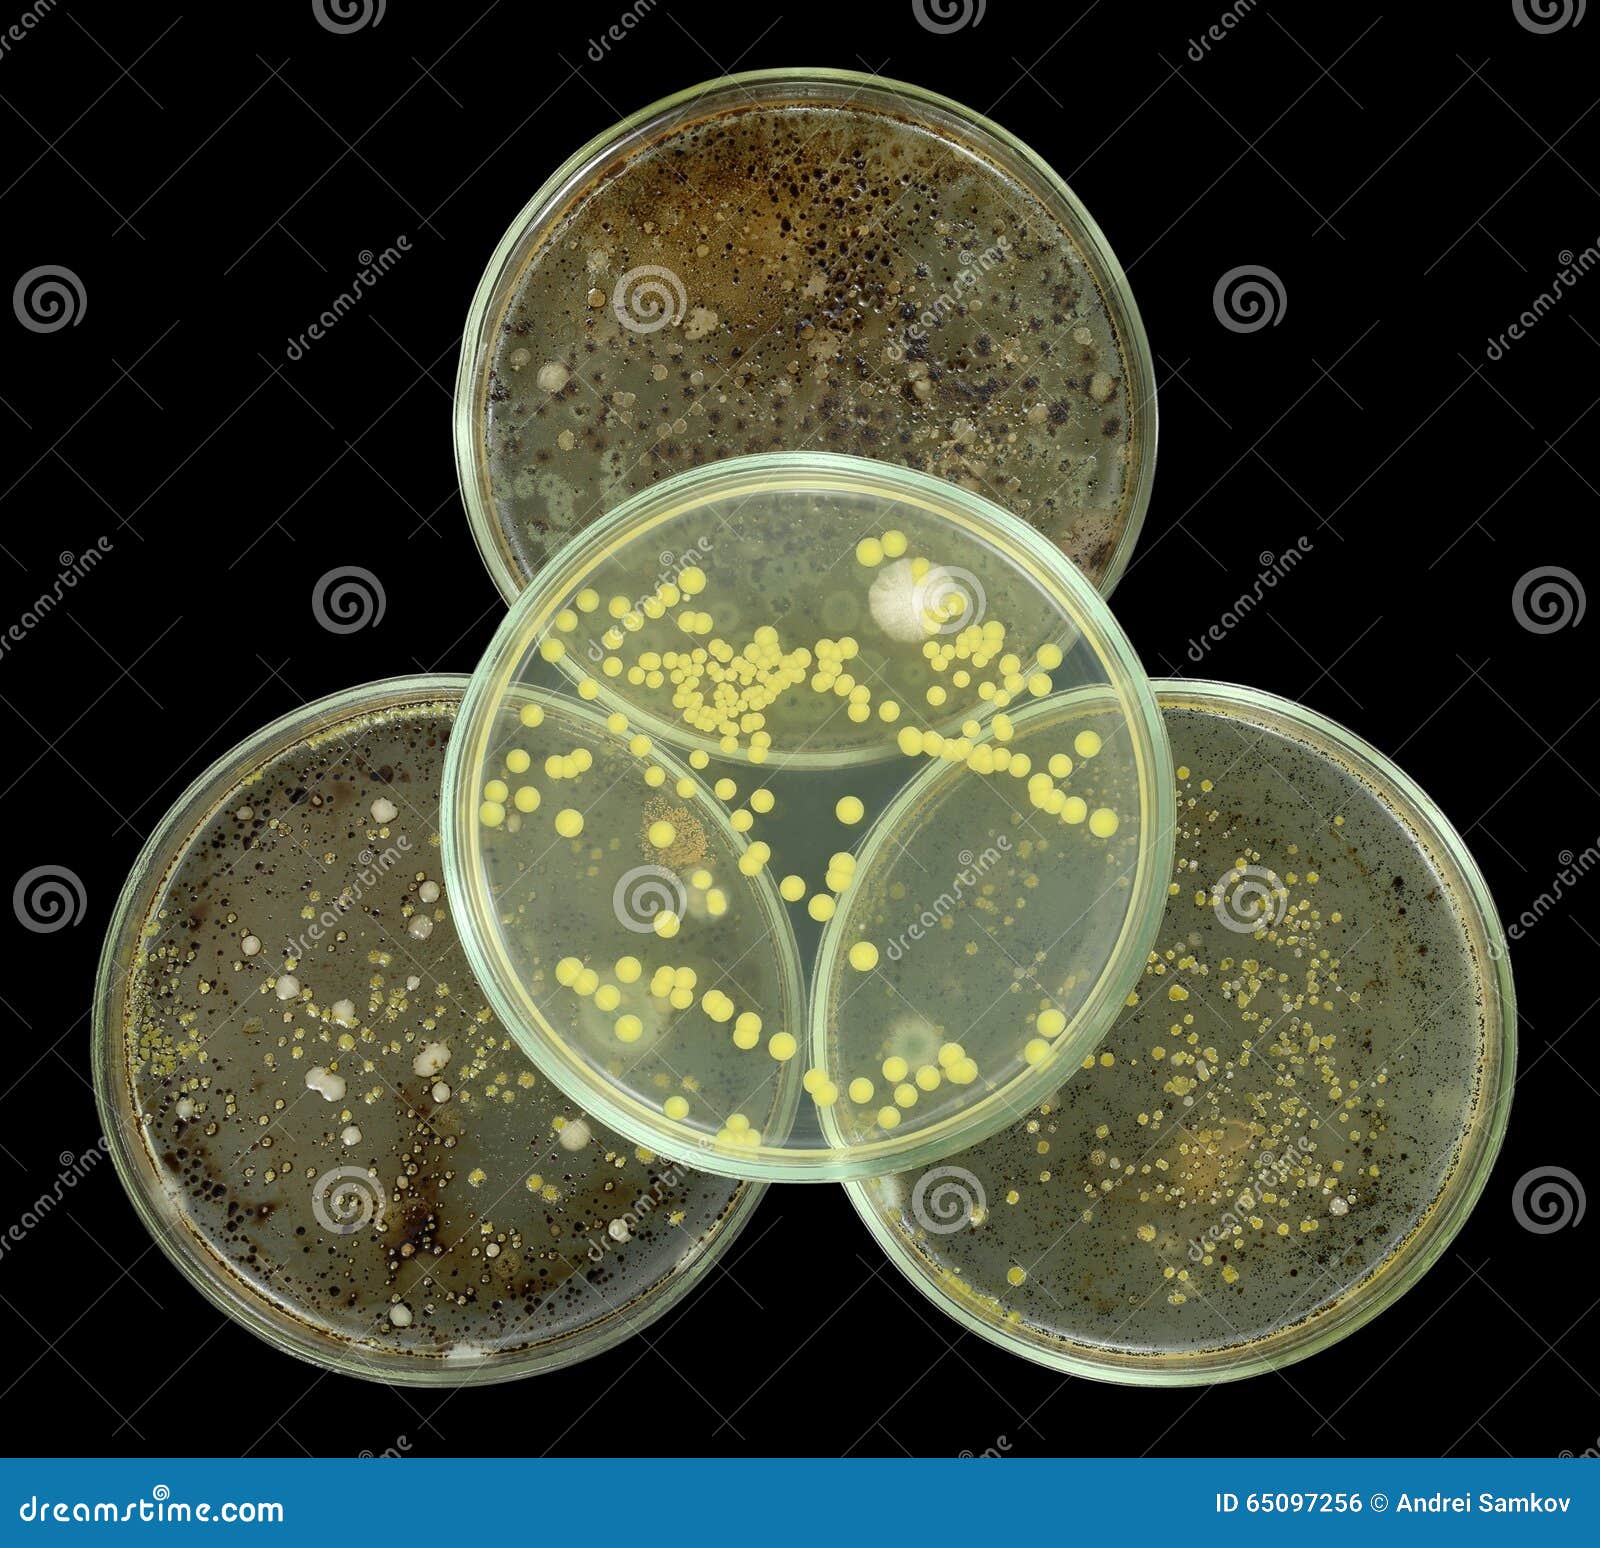 biohazard  interpretation by petri plates composition 